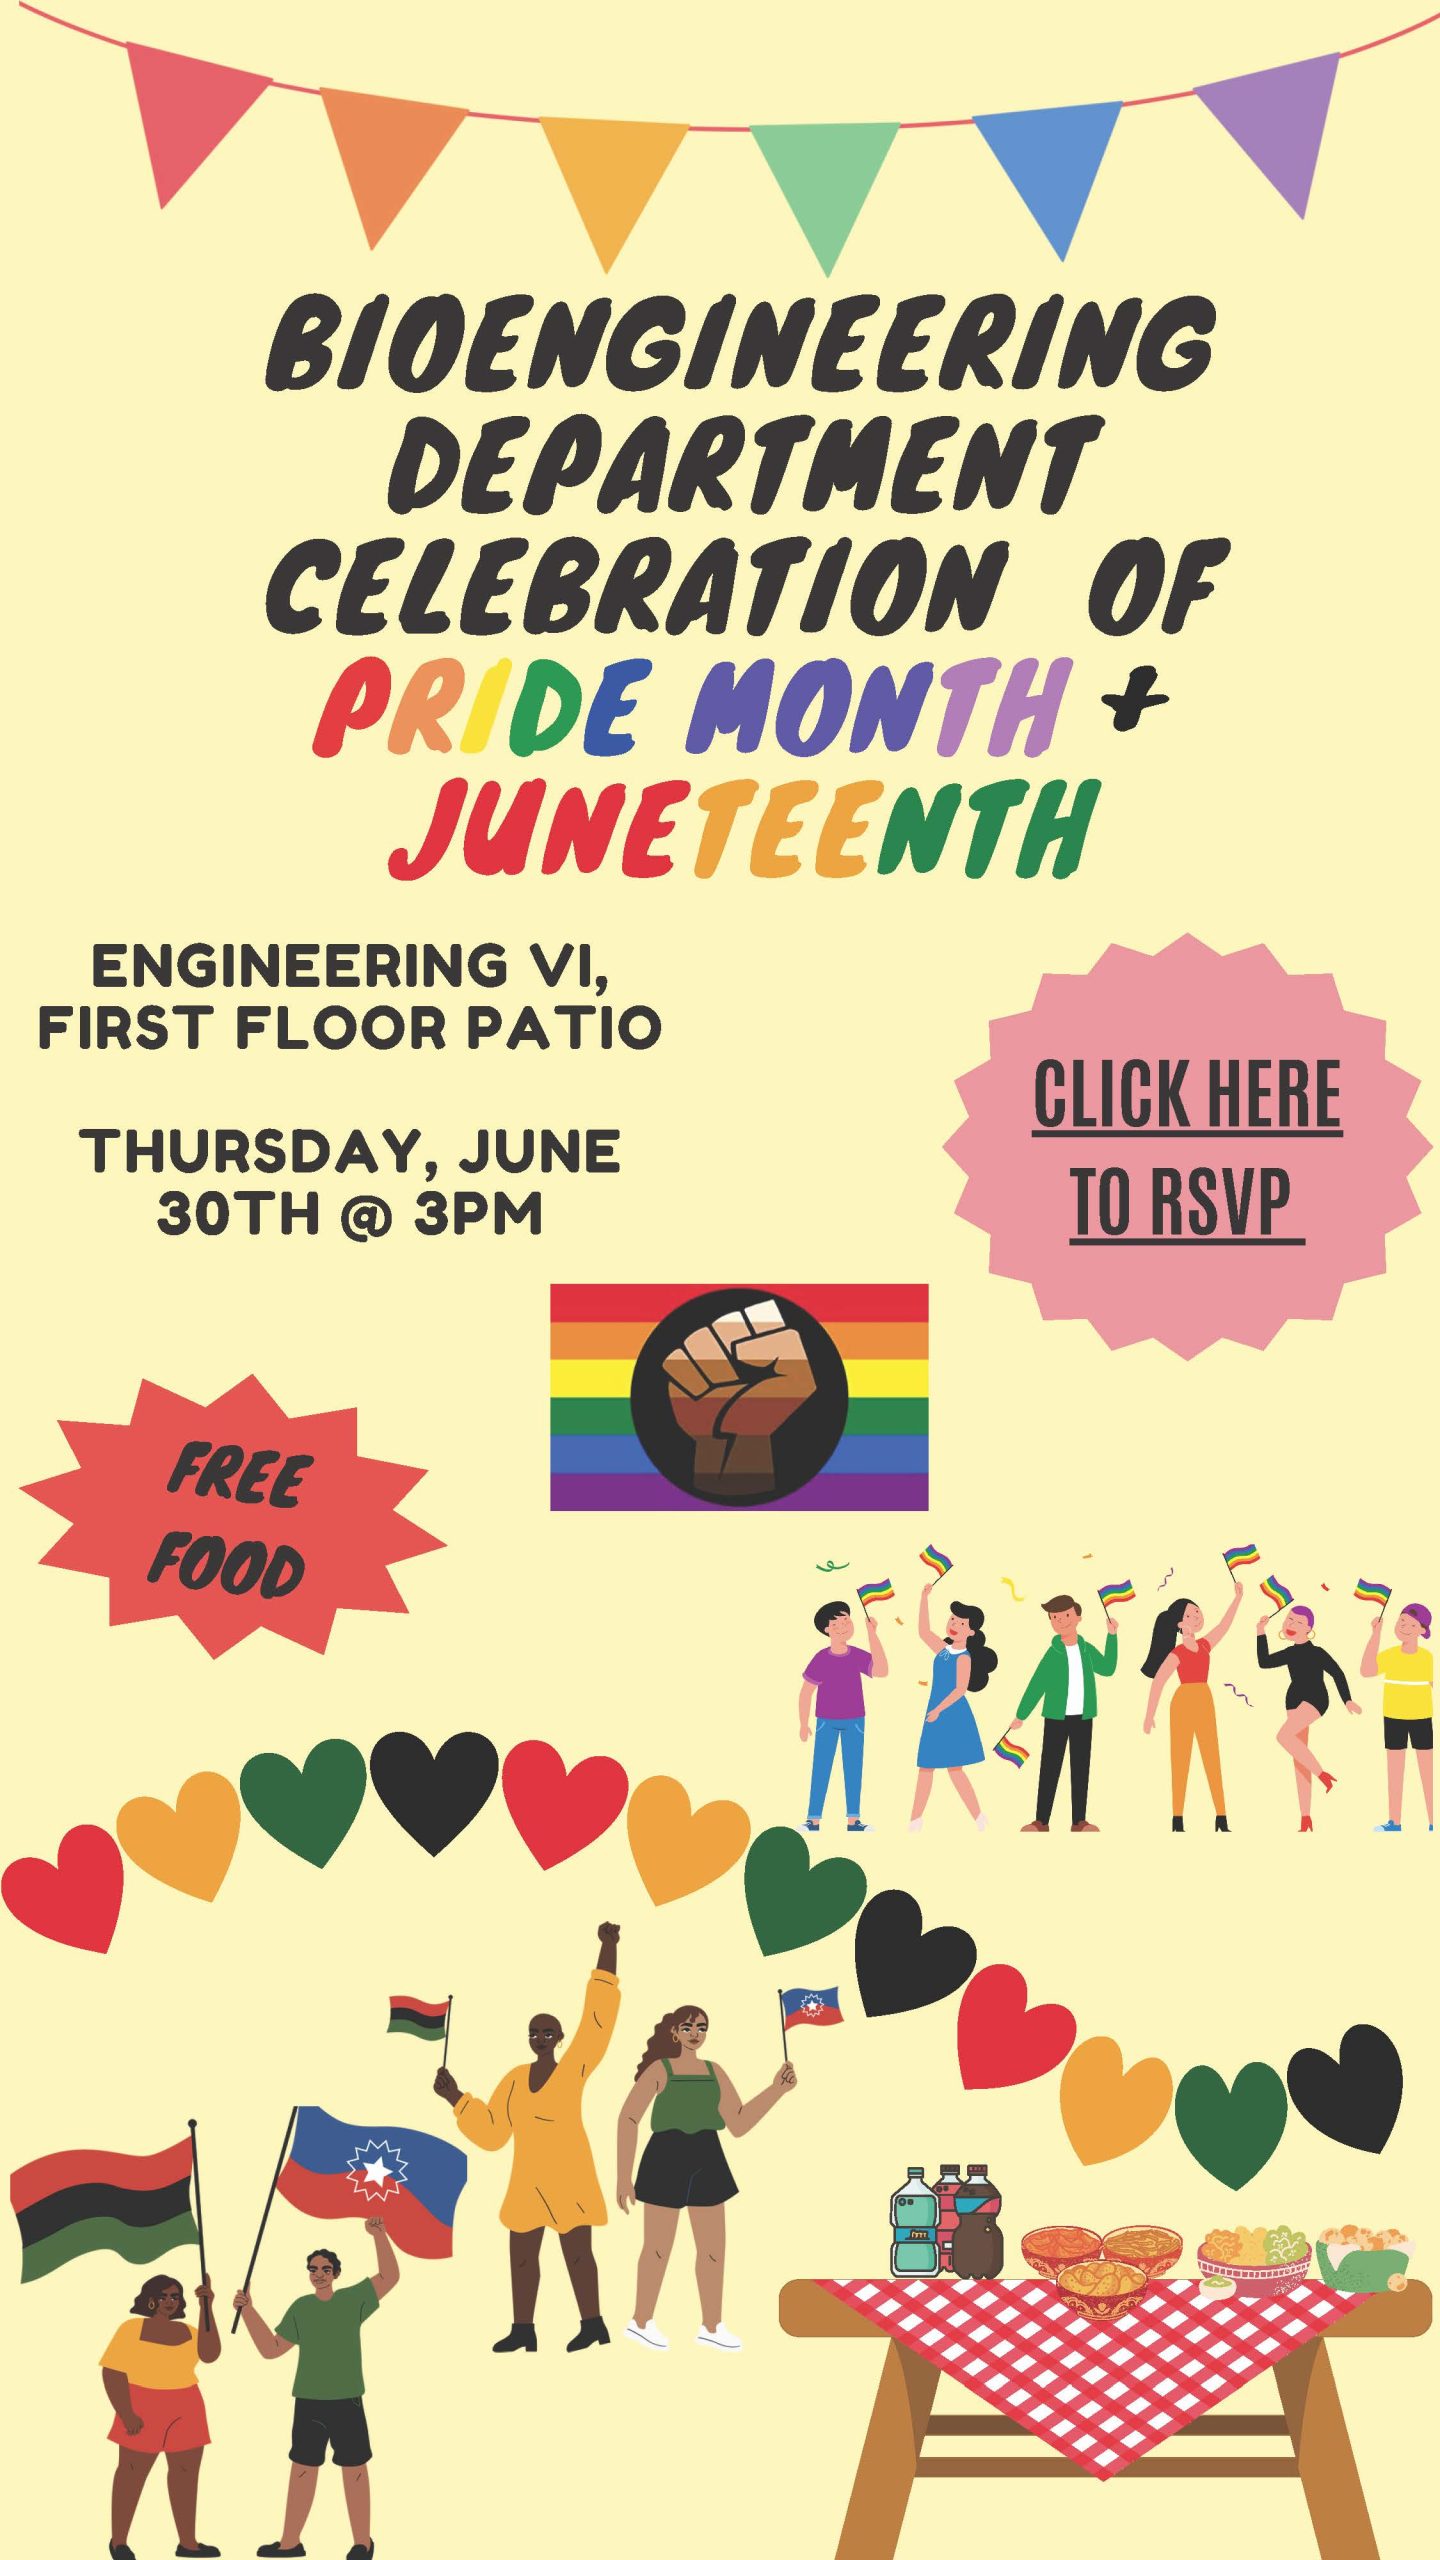 Bioengineering Department Celebration of Pride Month and Juneteenth